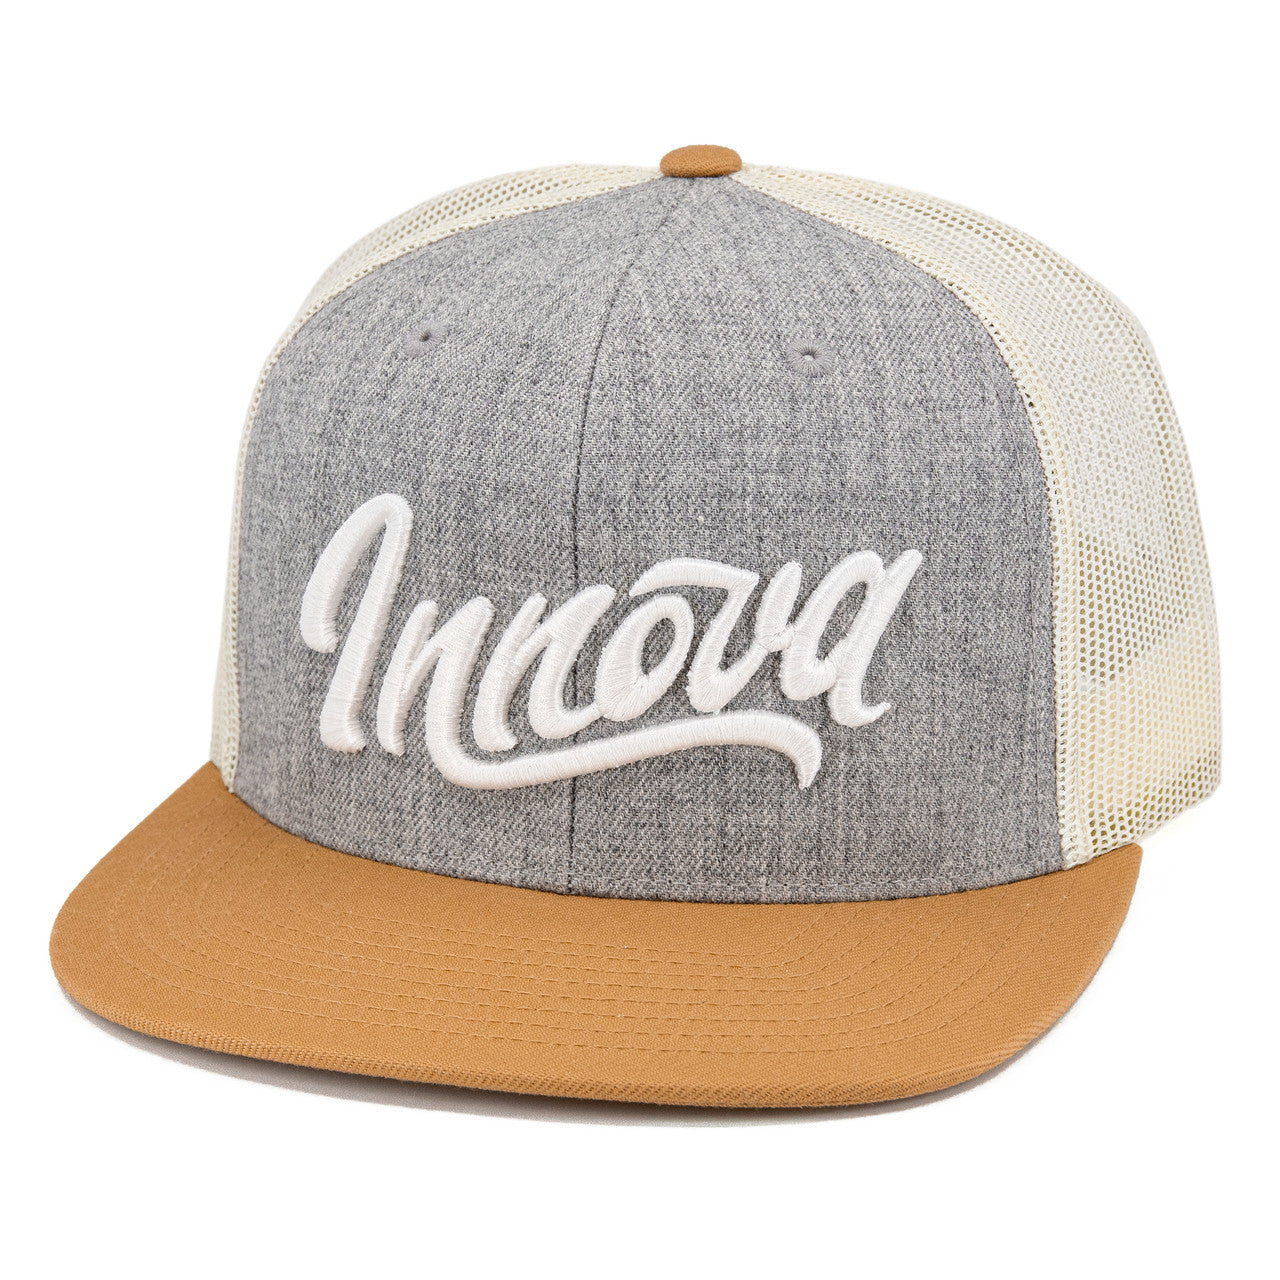 Innova Flow Hat